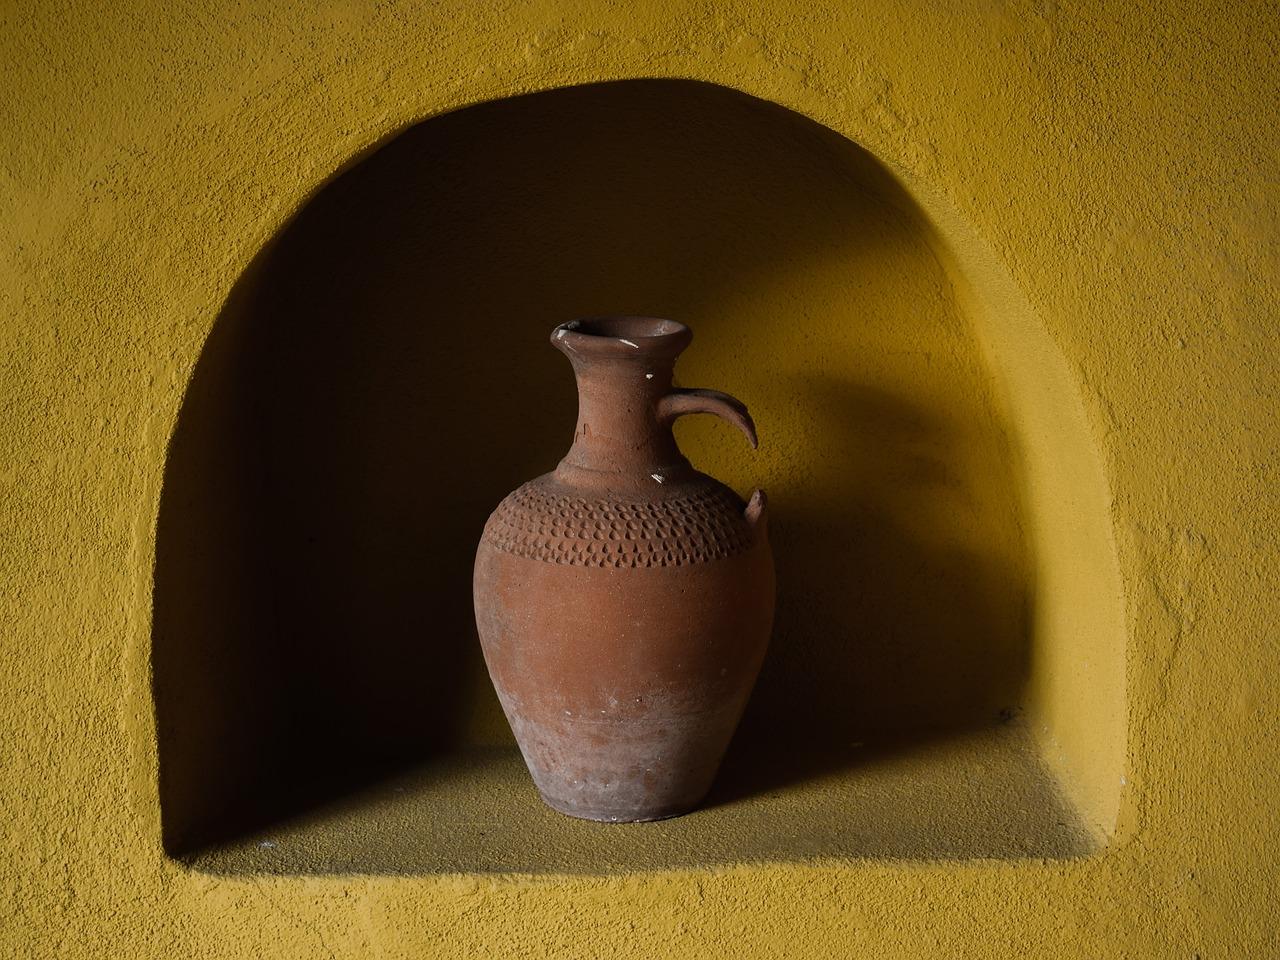 Vaza v muzeju